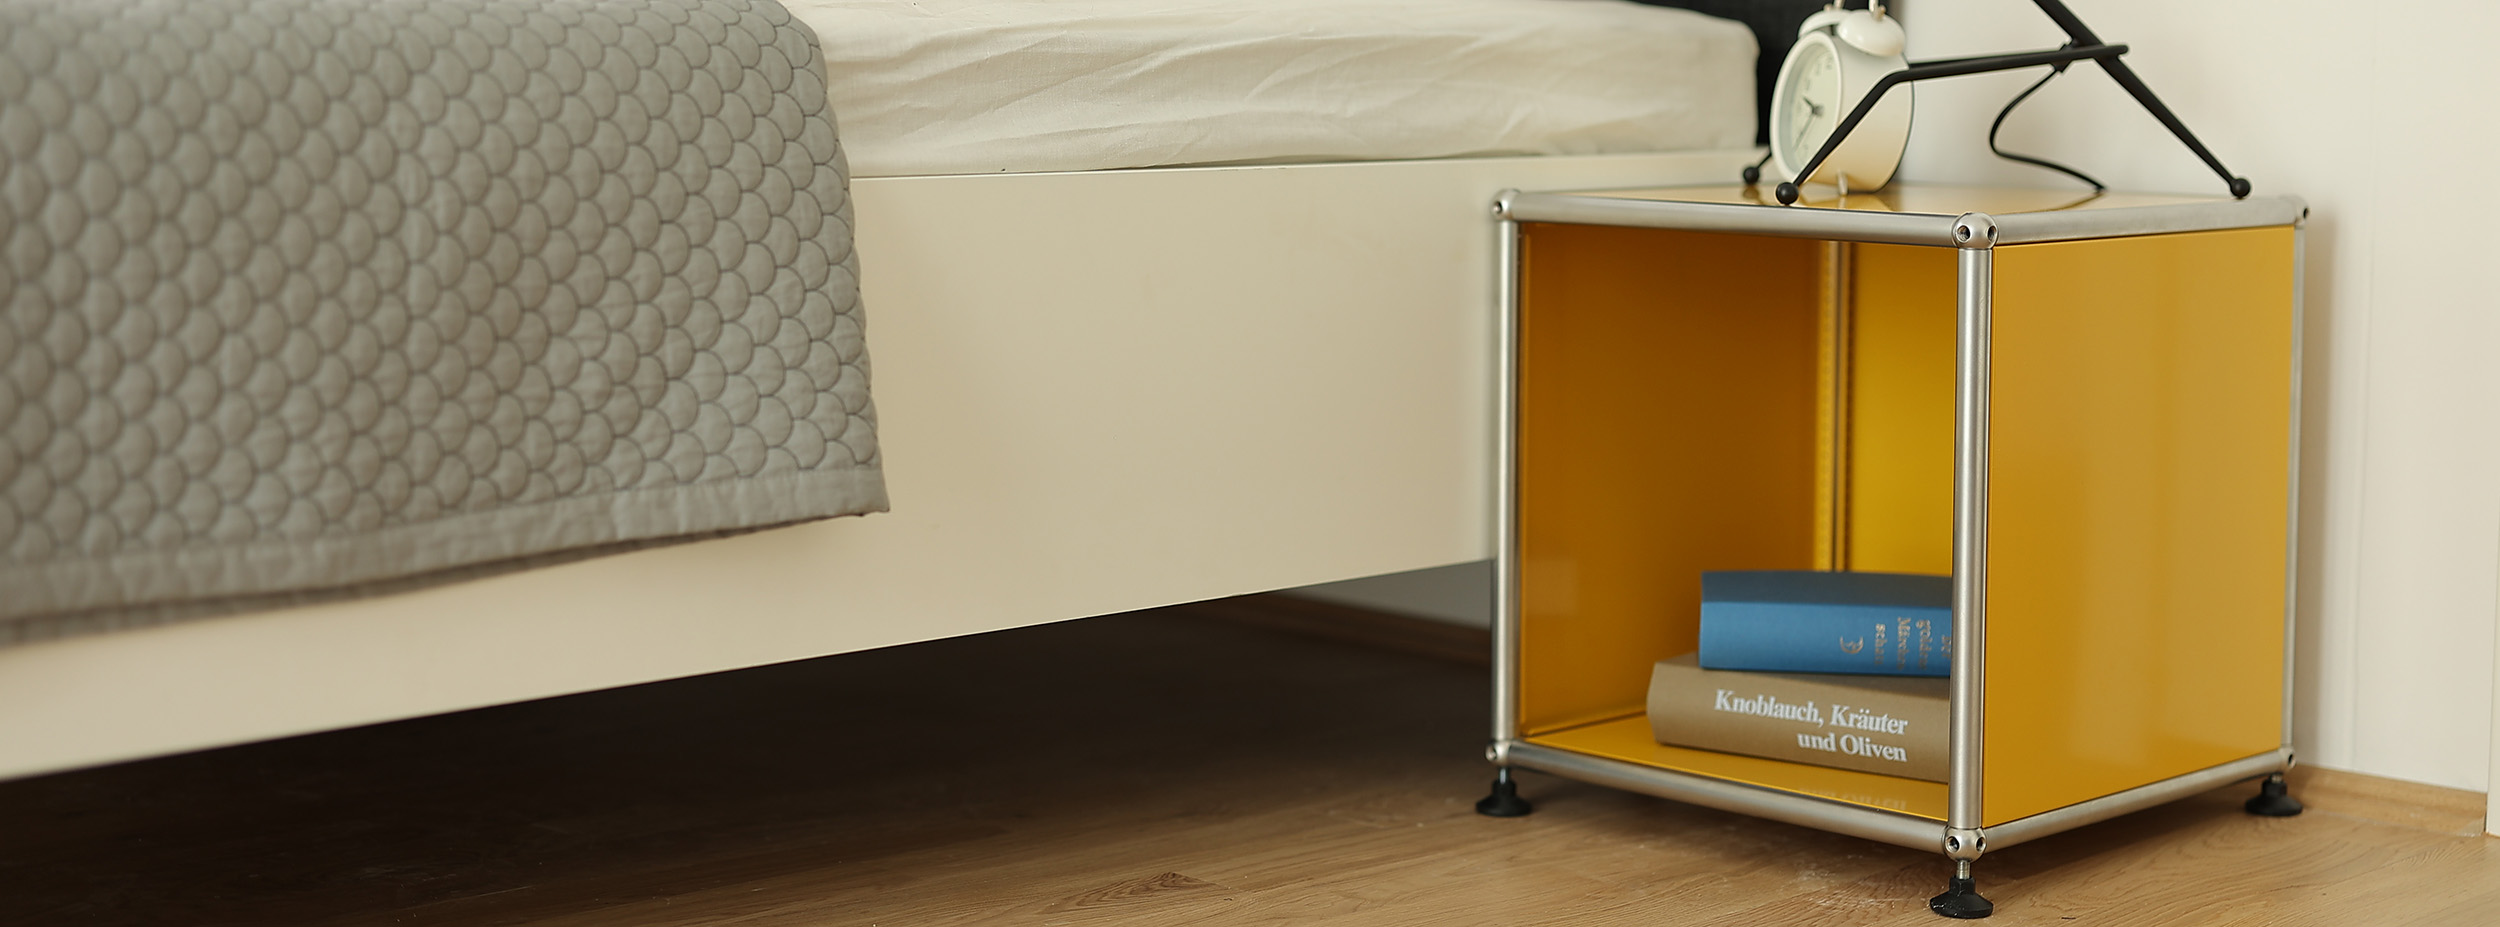 konektra bedside tables | expiration Furniture | & Modular date without konektra Office Home